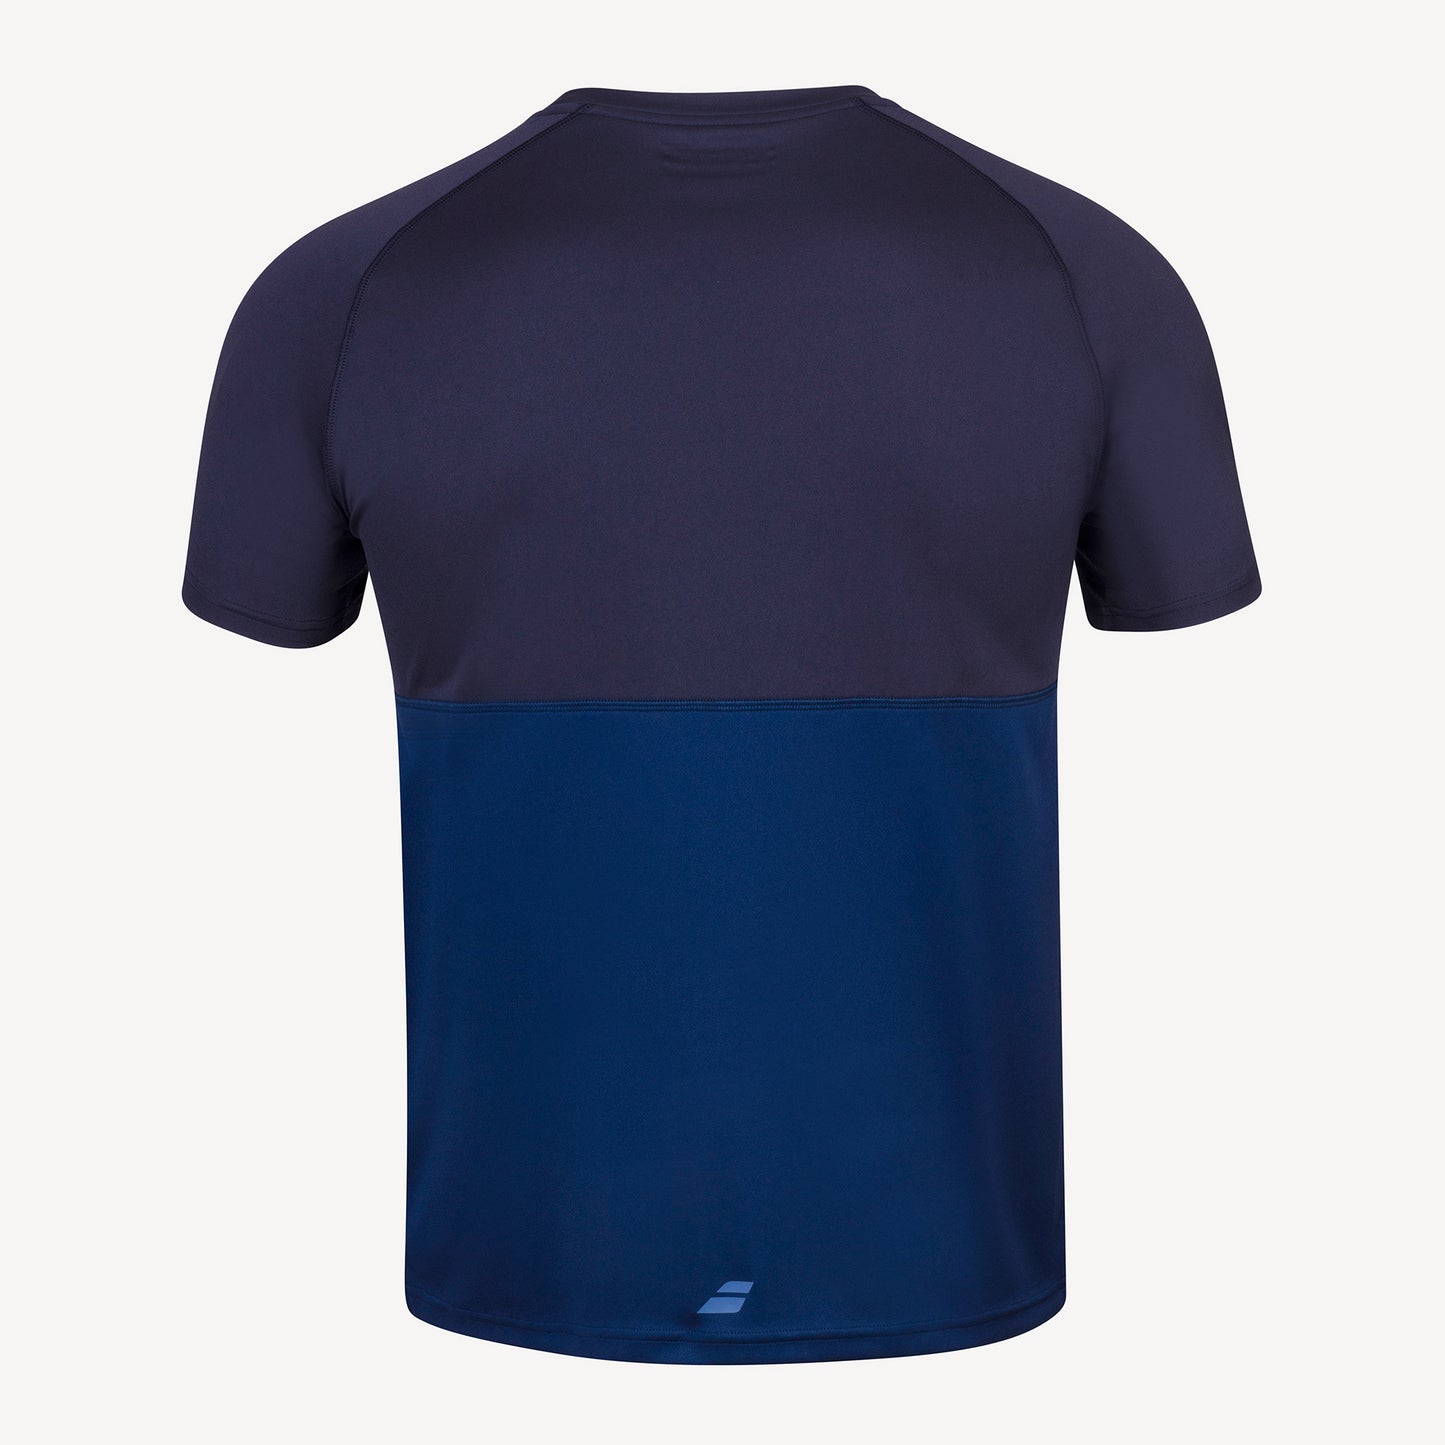 Babolat Play Club Boys' Tennis Shirt Blue (2)